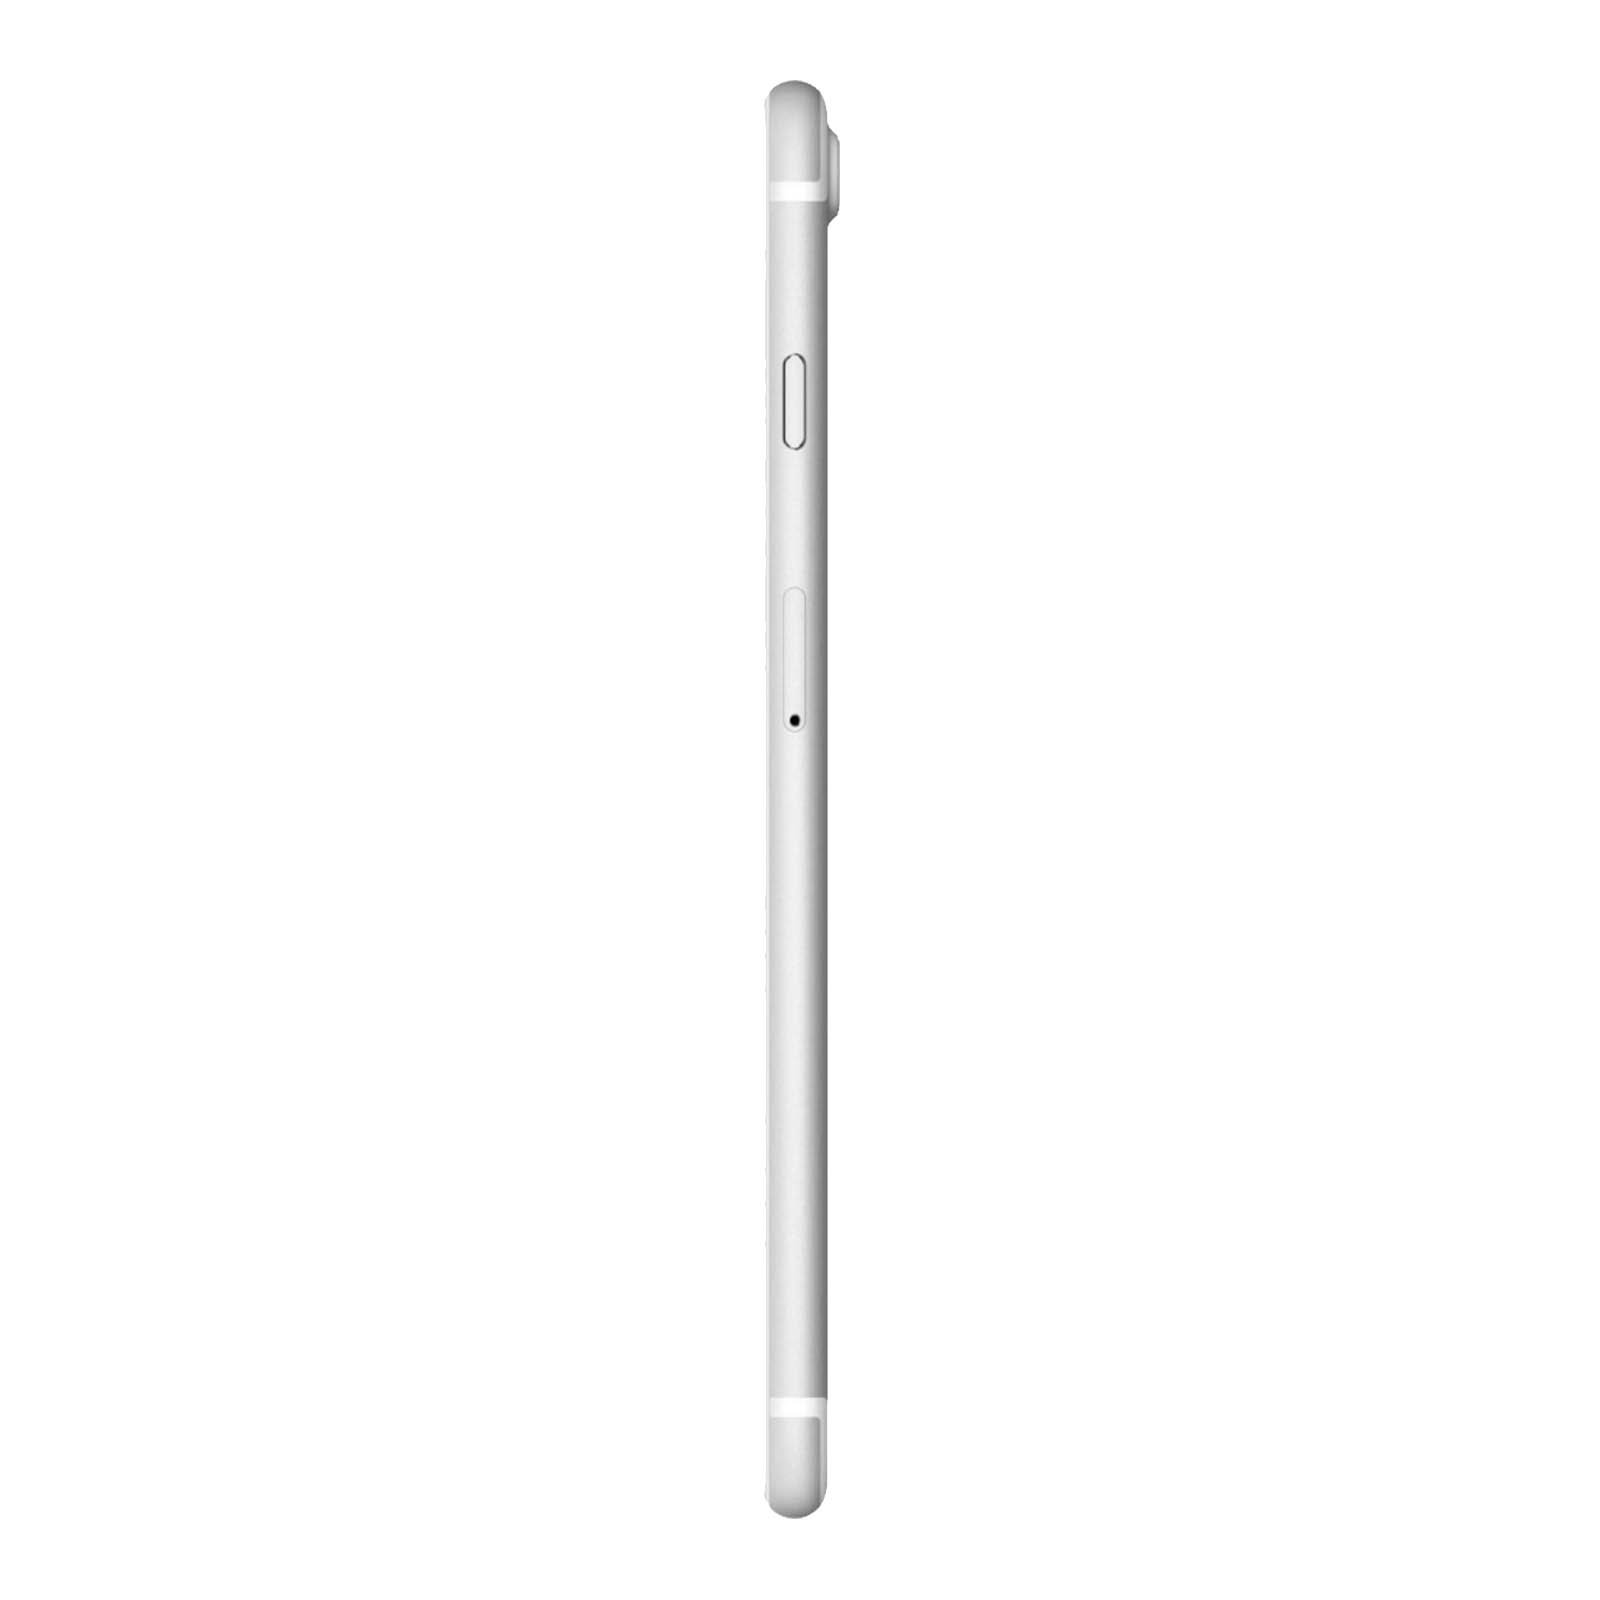 Apple iPhone 7 256GB Silver Good - Unlocked